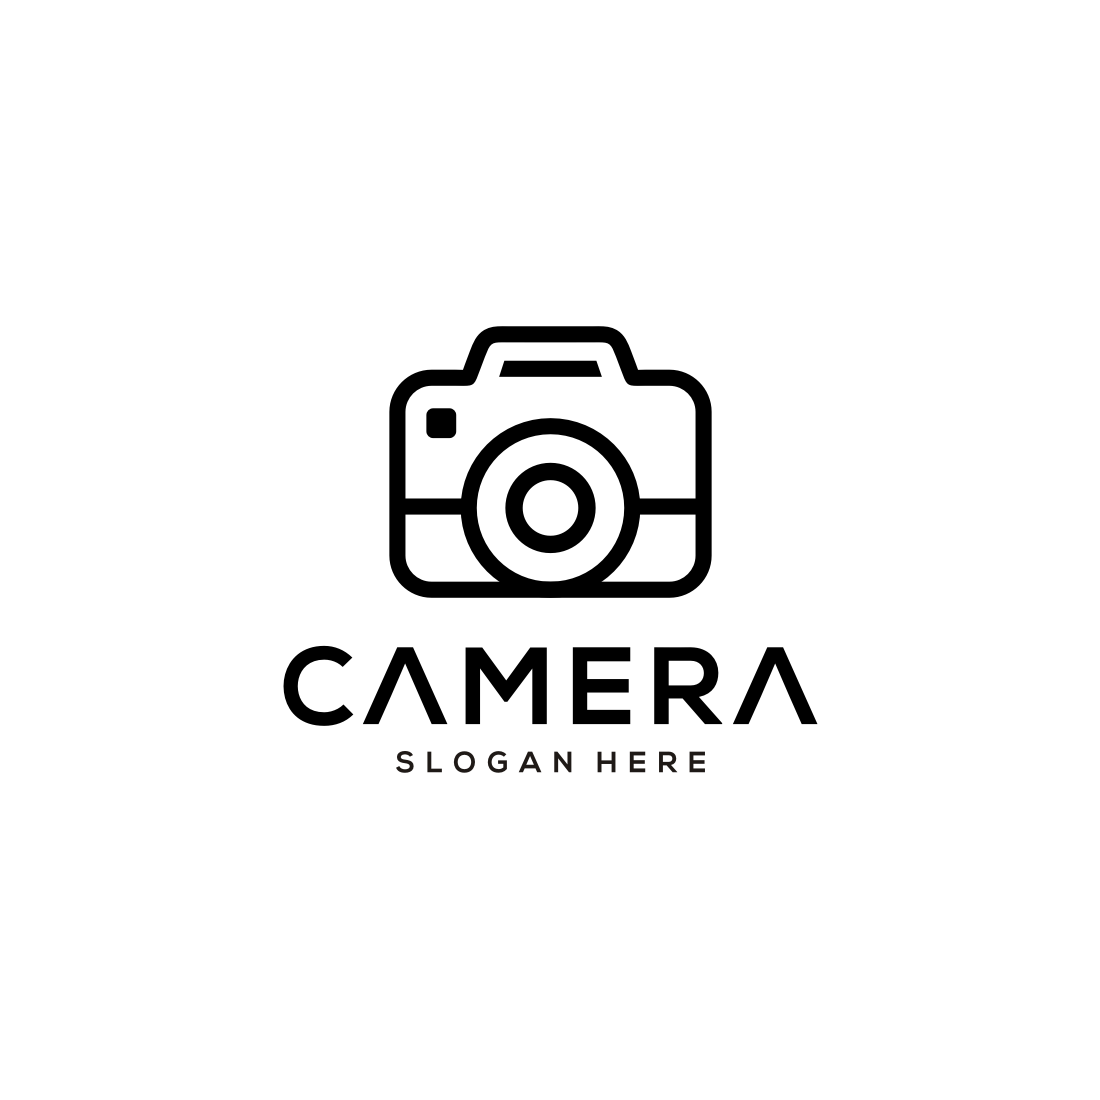 Camera Line Style Logo Vector Design cover image.